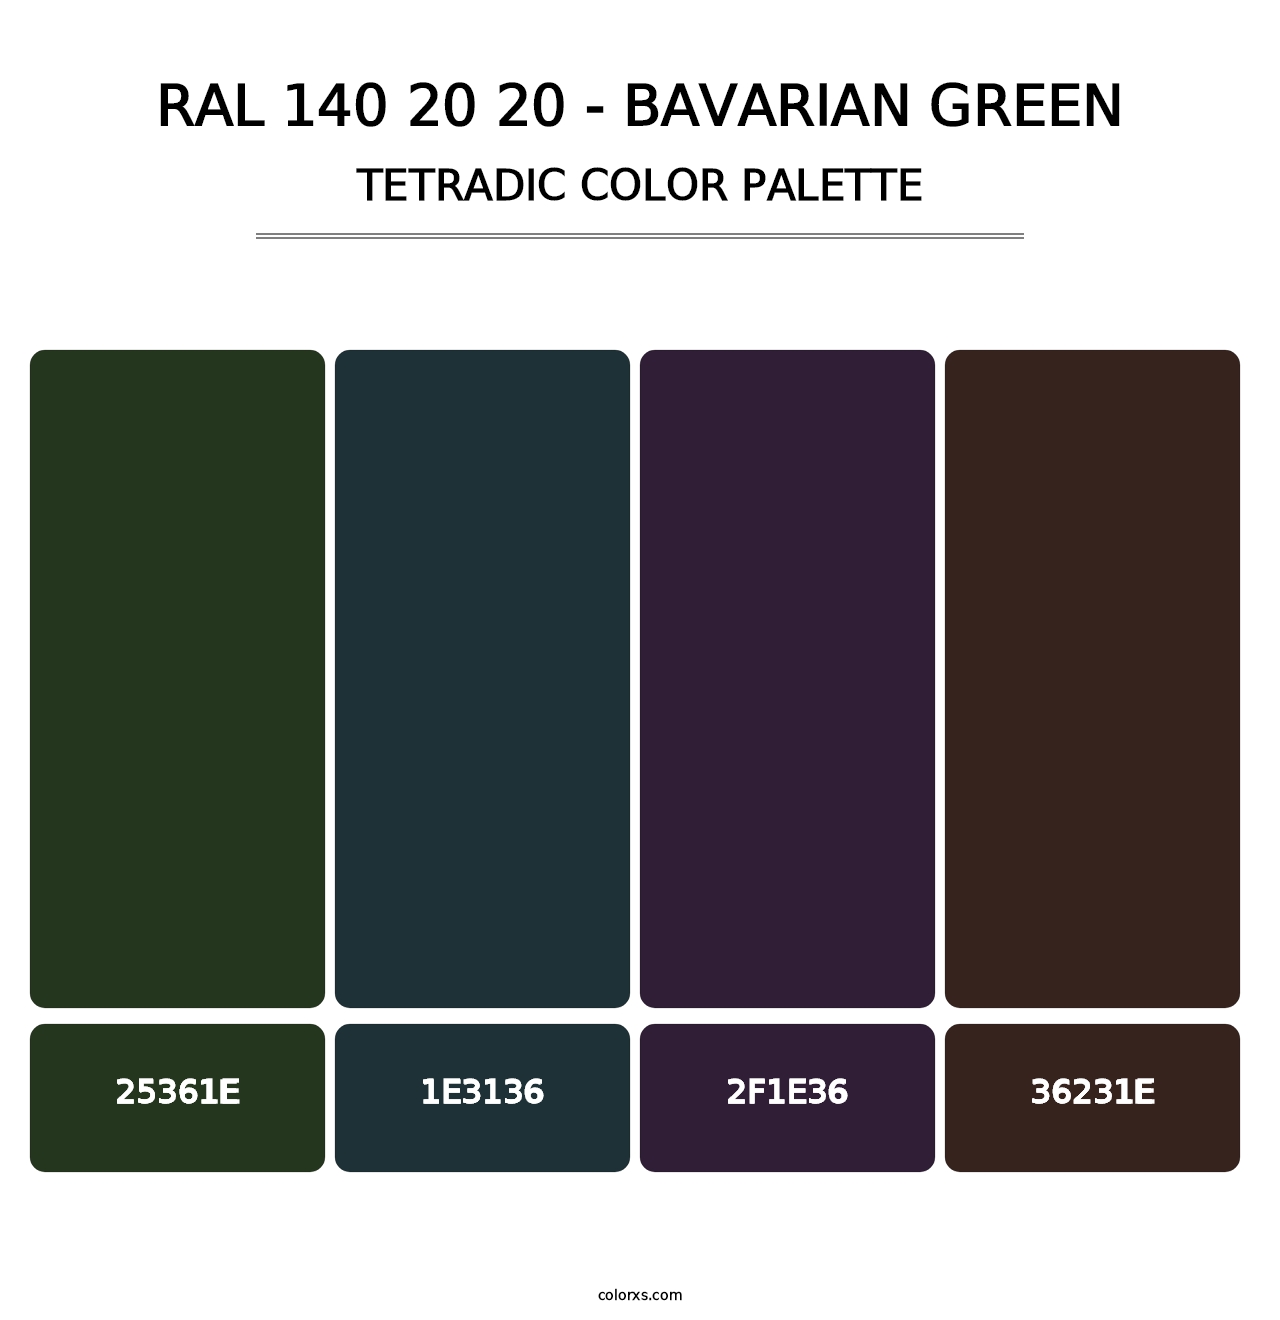 RAL 140 20 20 - Bavarian Green - Tetradic Color Palette